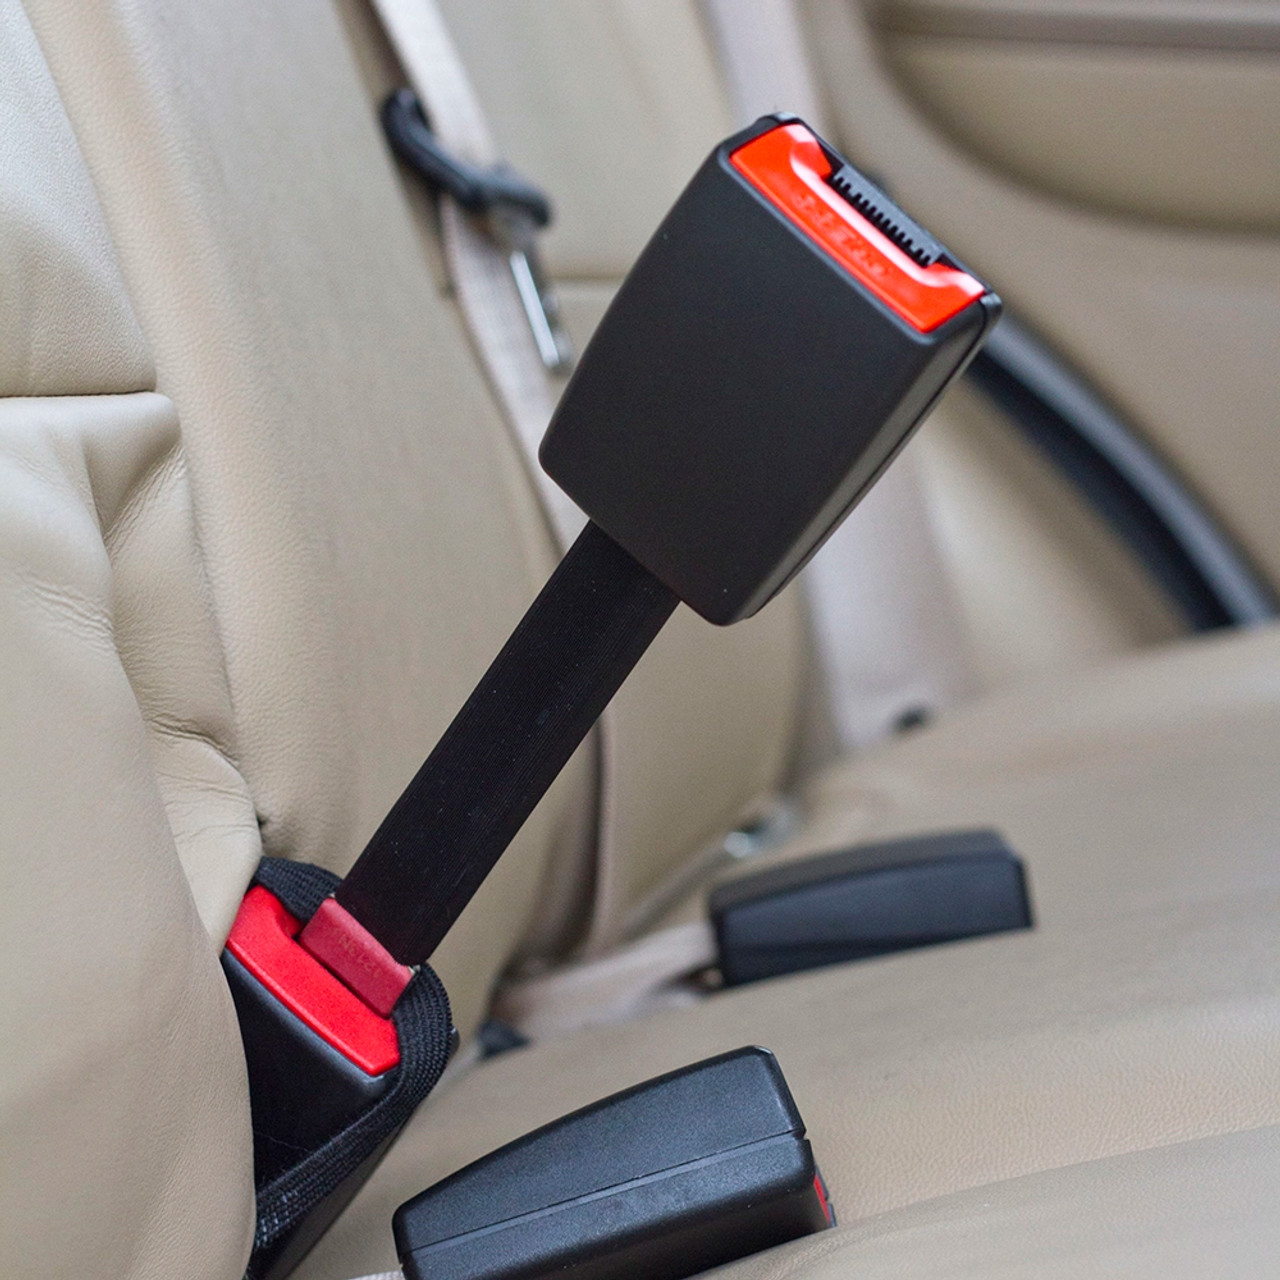 Tesla Model S Seat Belt Extender